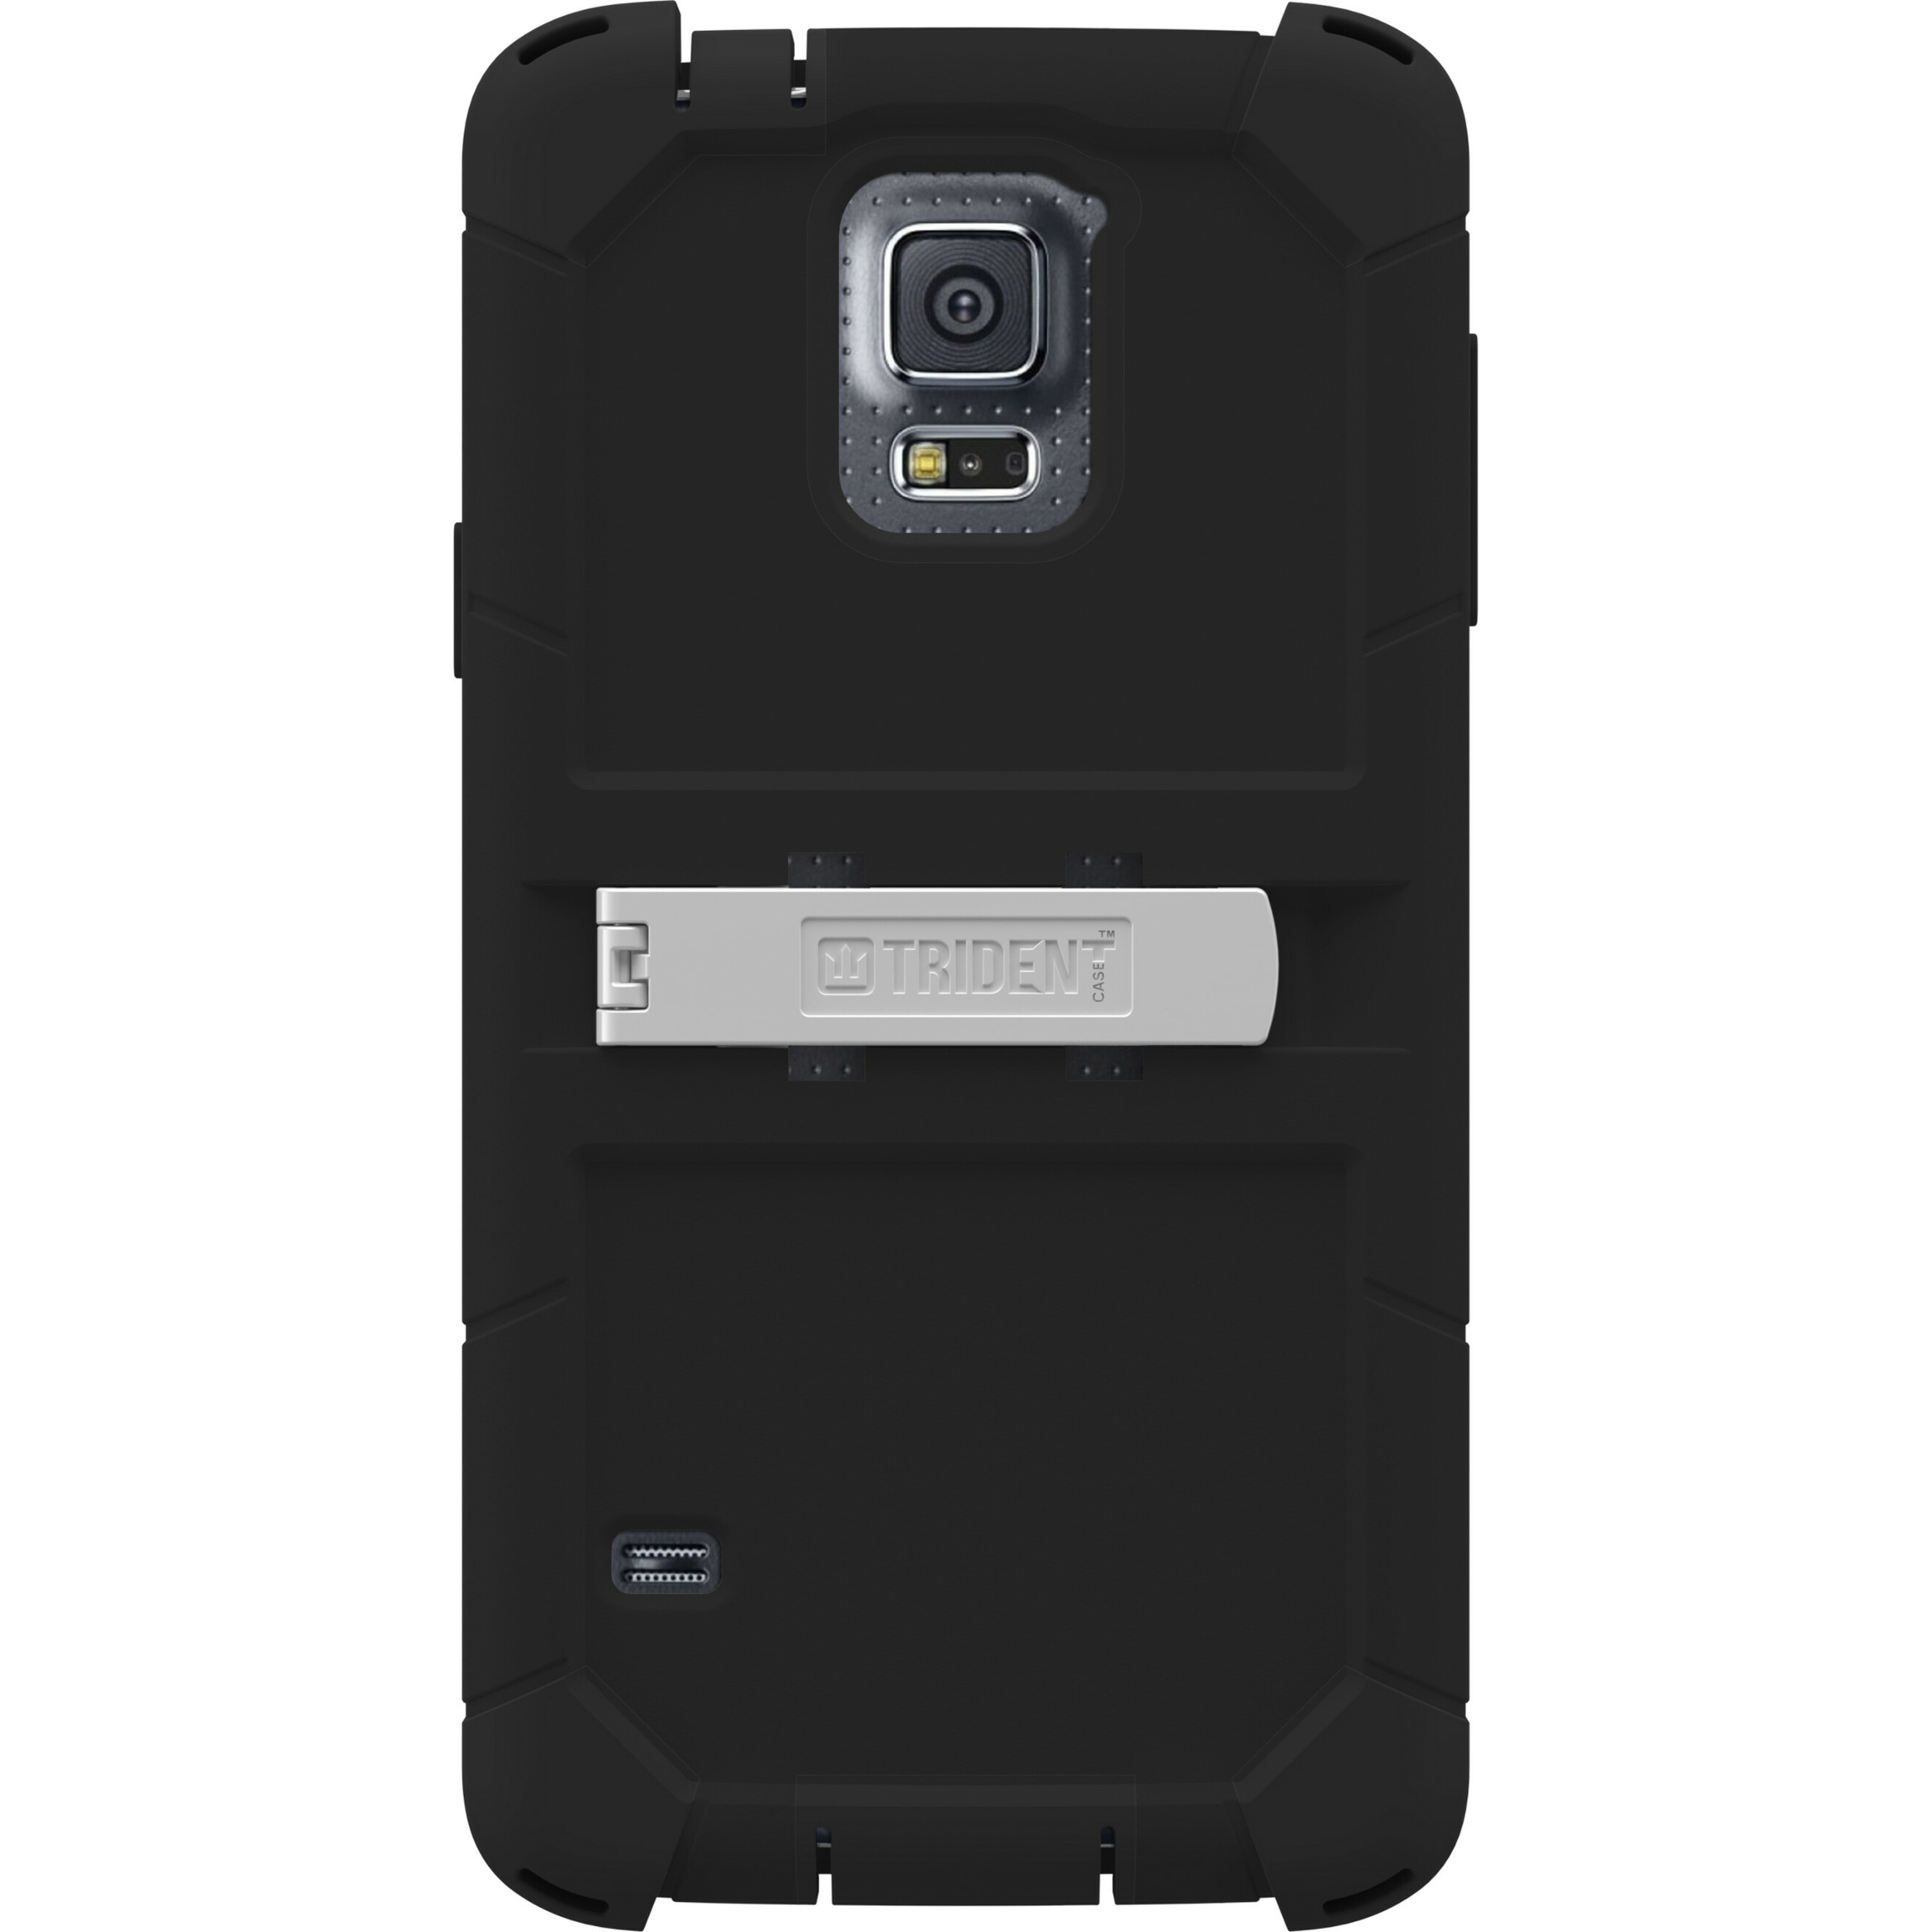 Trident Kraken AMS Carrying Case Rugged (Holster) Smartphone, Black - image 3 of 6